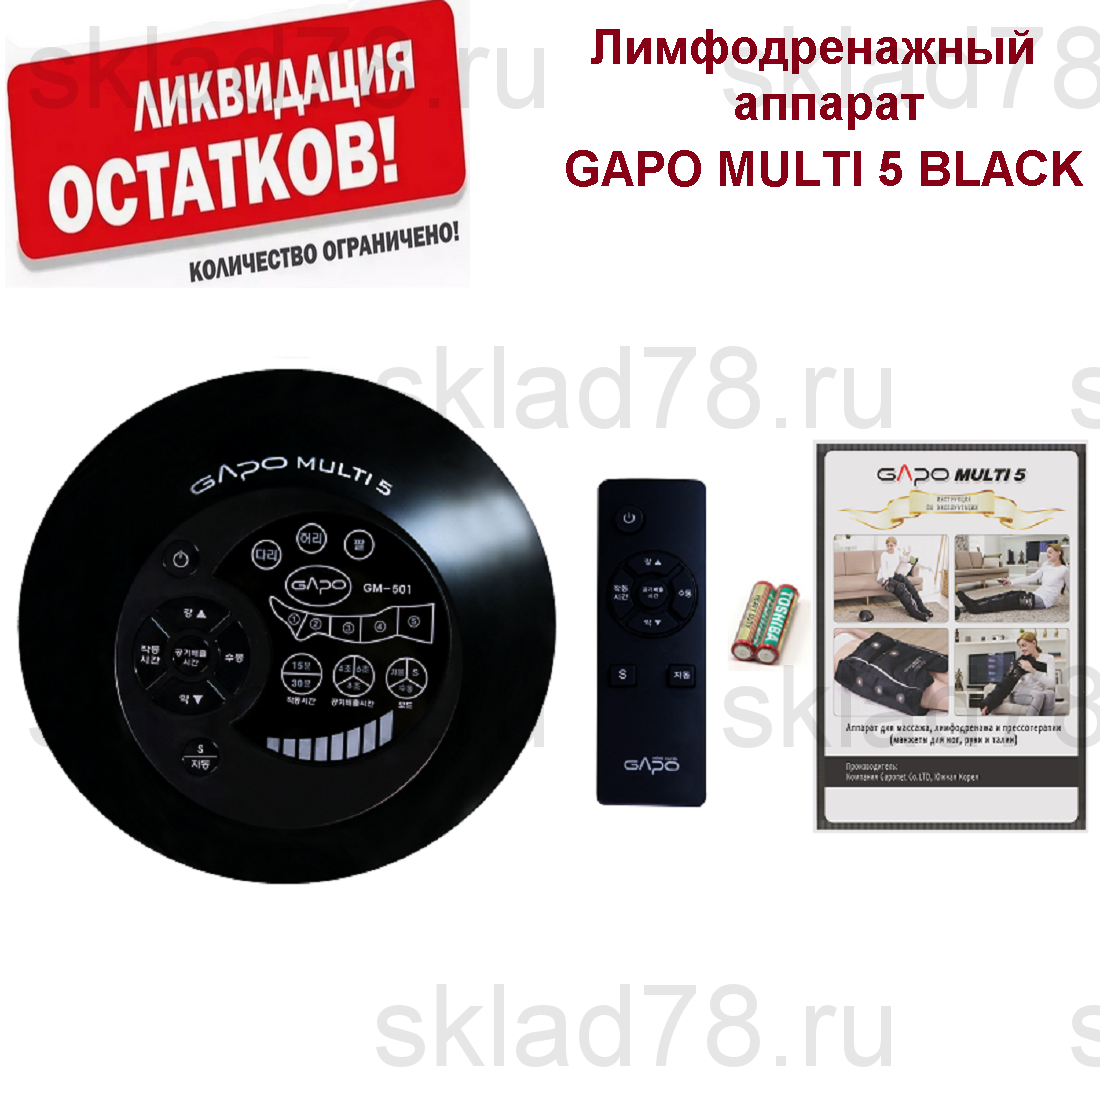 Gapo Multi-5 Black "Аппарат "